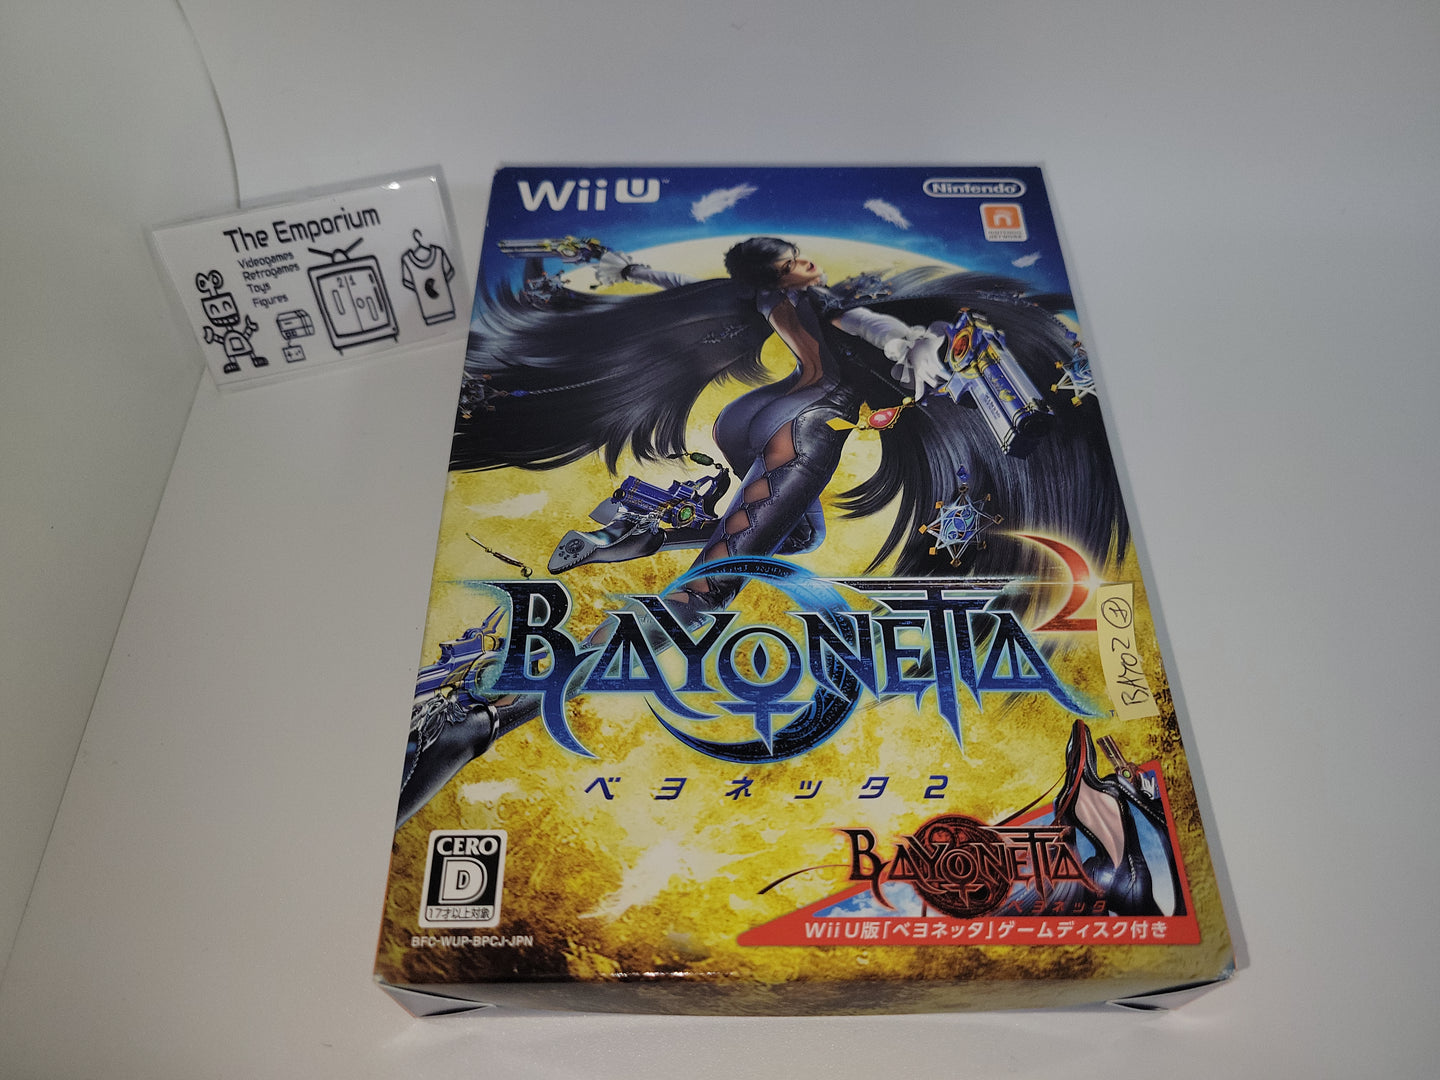 Bayonetta 1+2 Collector's Edition - Nintendo WiiU